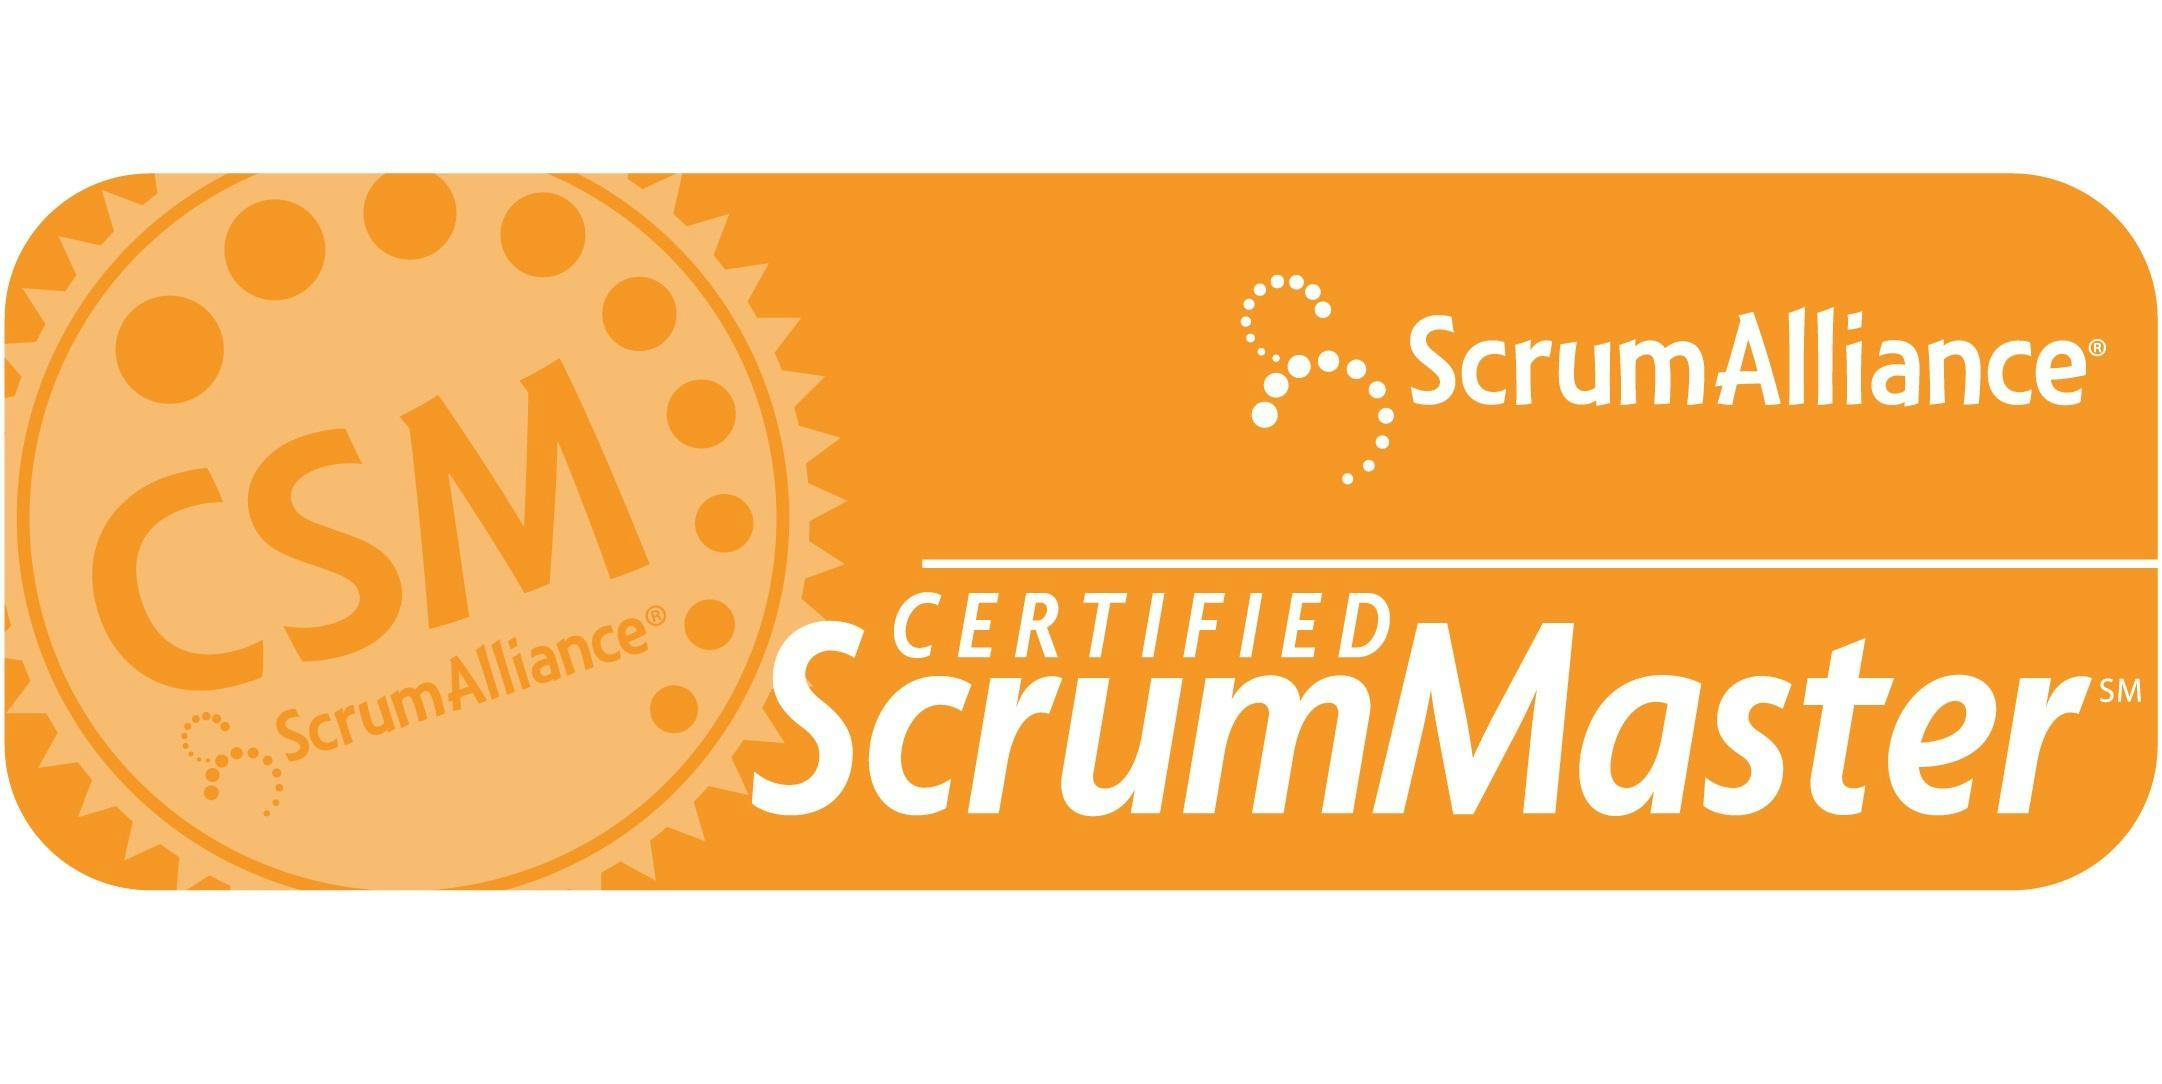 Certified ScrumMaster Training (CSM) Training - 27-28 June 2019 Melbourne